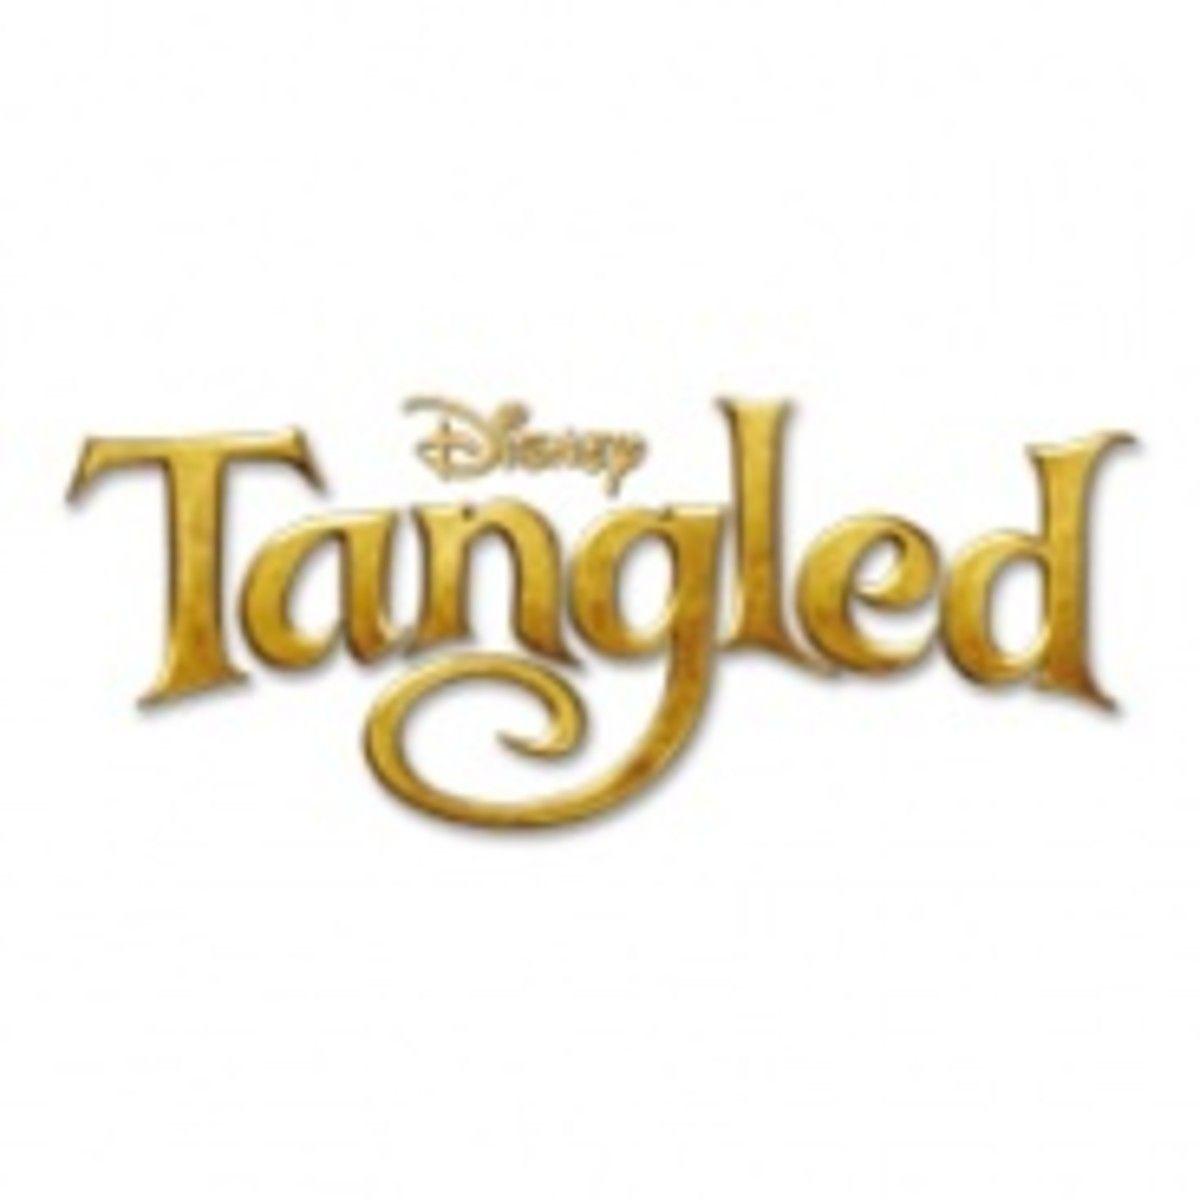 Tangled Movie Logo - Disney's Tangled tops the box office